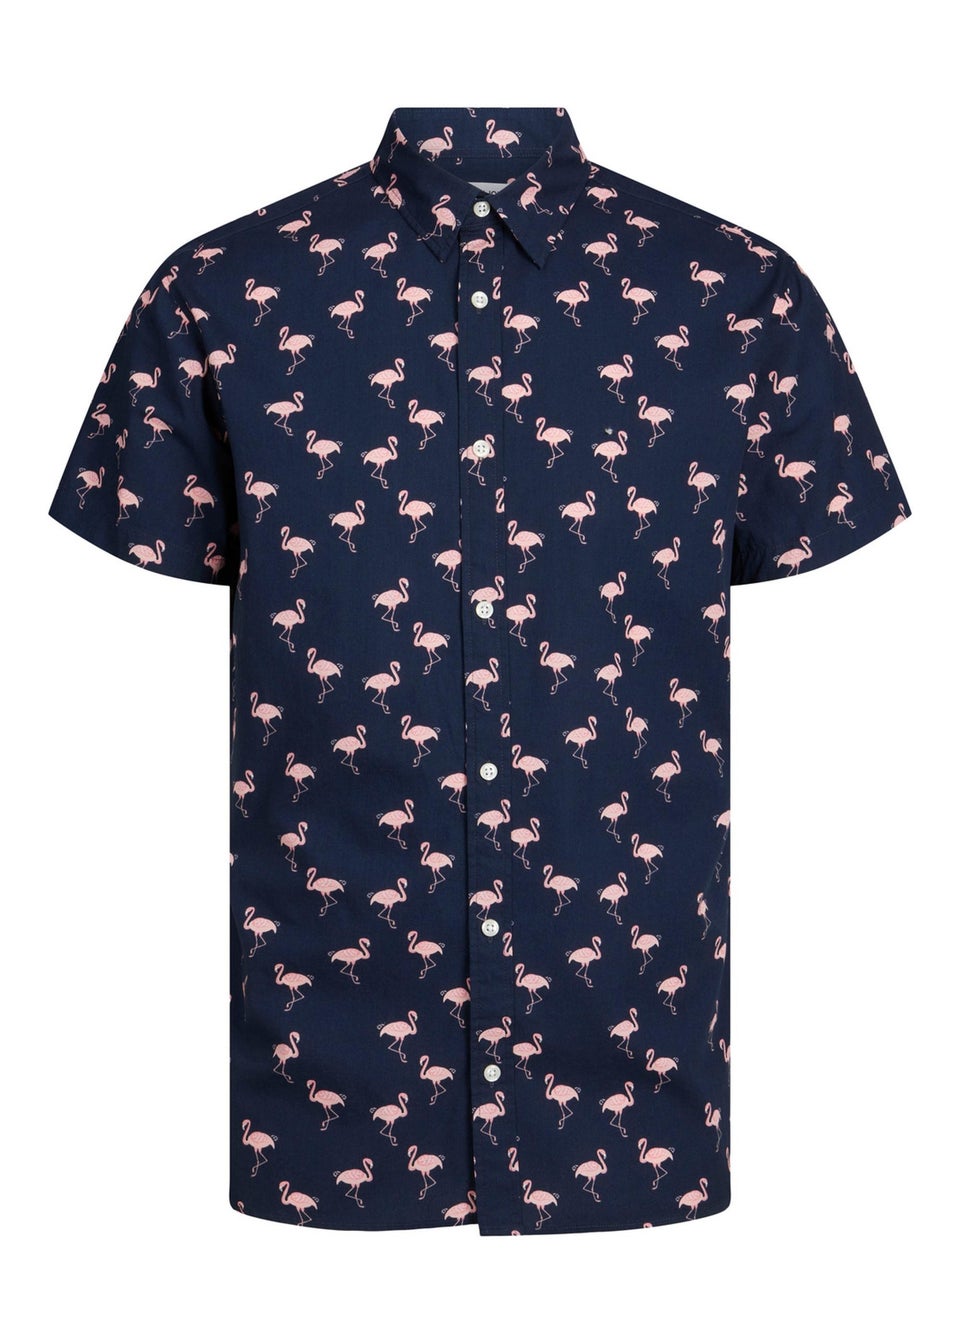 Jack & Jones Boys Navy Flamingo Print Shirt (6-16yrs)